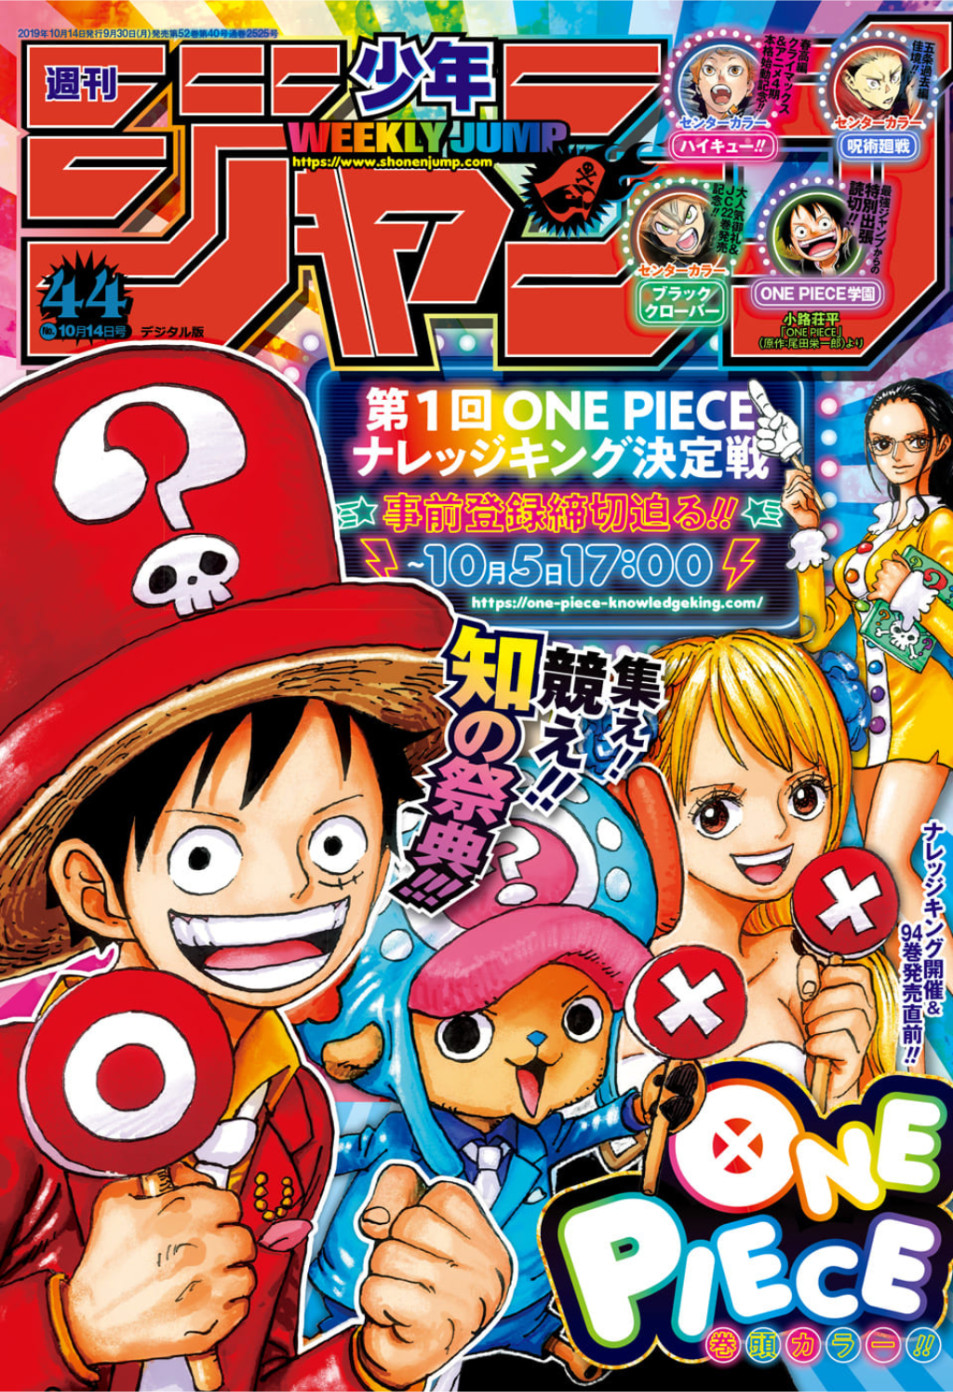 Weekly Shonen Jump Issue 44 19 Jump Database Fandom